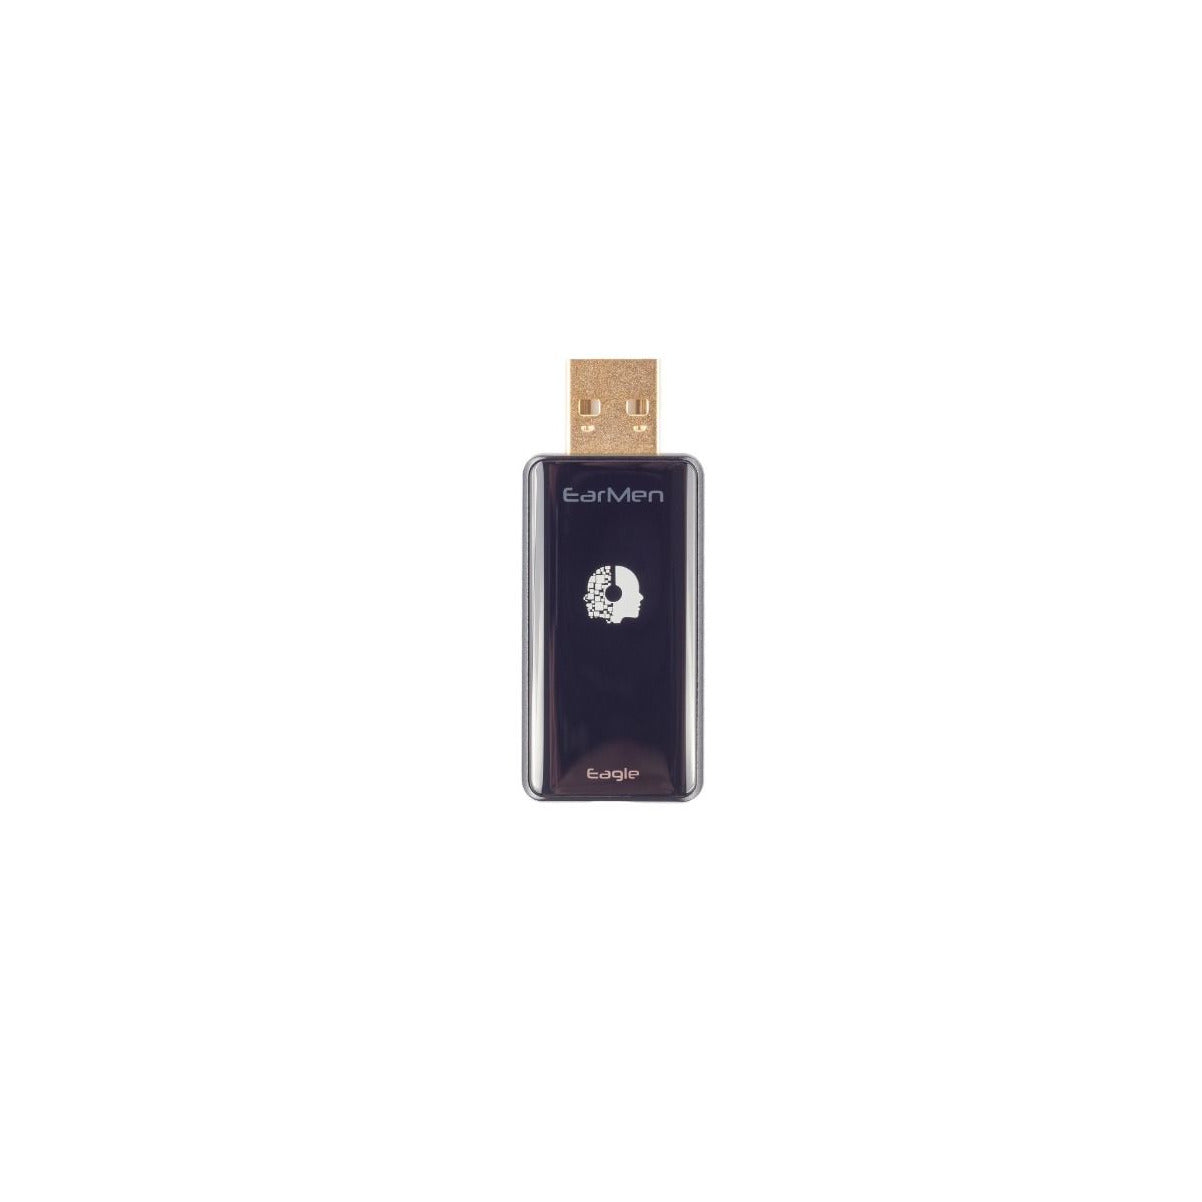 EarMen EAGLE USB DAC + Headphone Amp